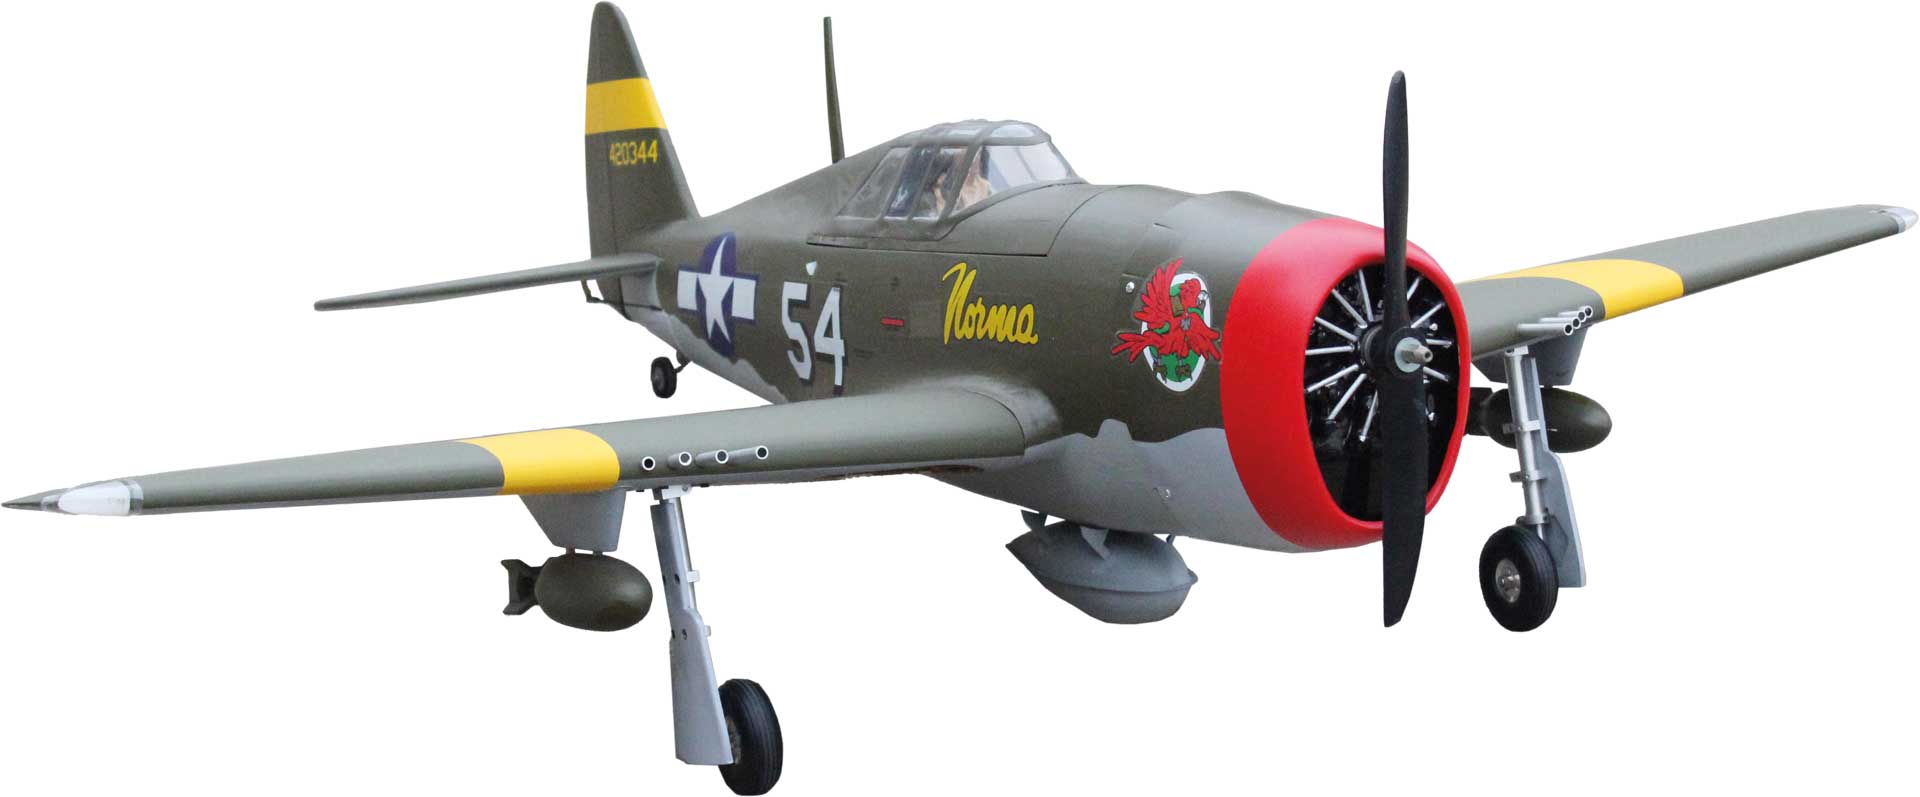 Seagull Models ( SG-Models ) P-47D Little Bunny MK-II 10ccm 55" w/o retractable landing gear ARF Warbird